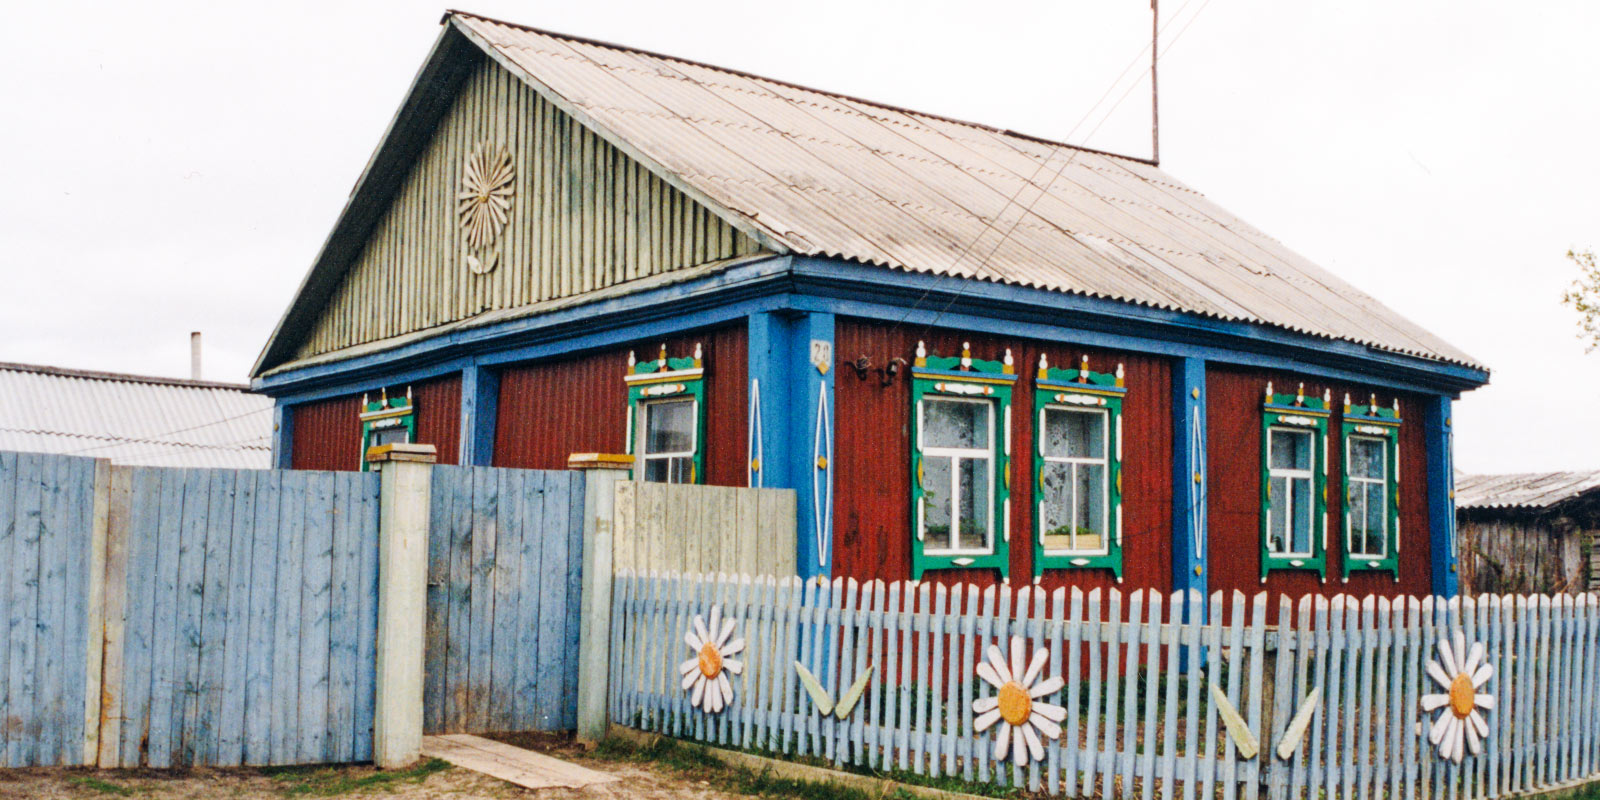 A dwelling house from Nikolayevka. Photo: A. Korb 1999.